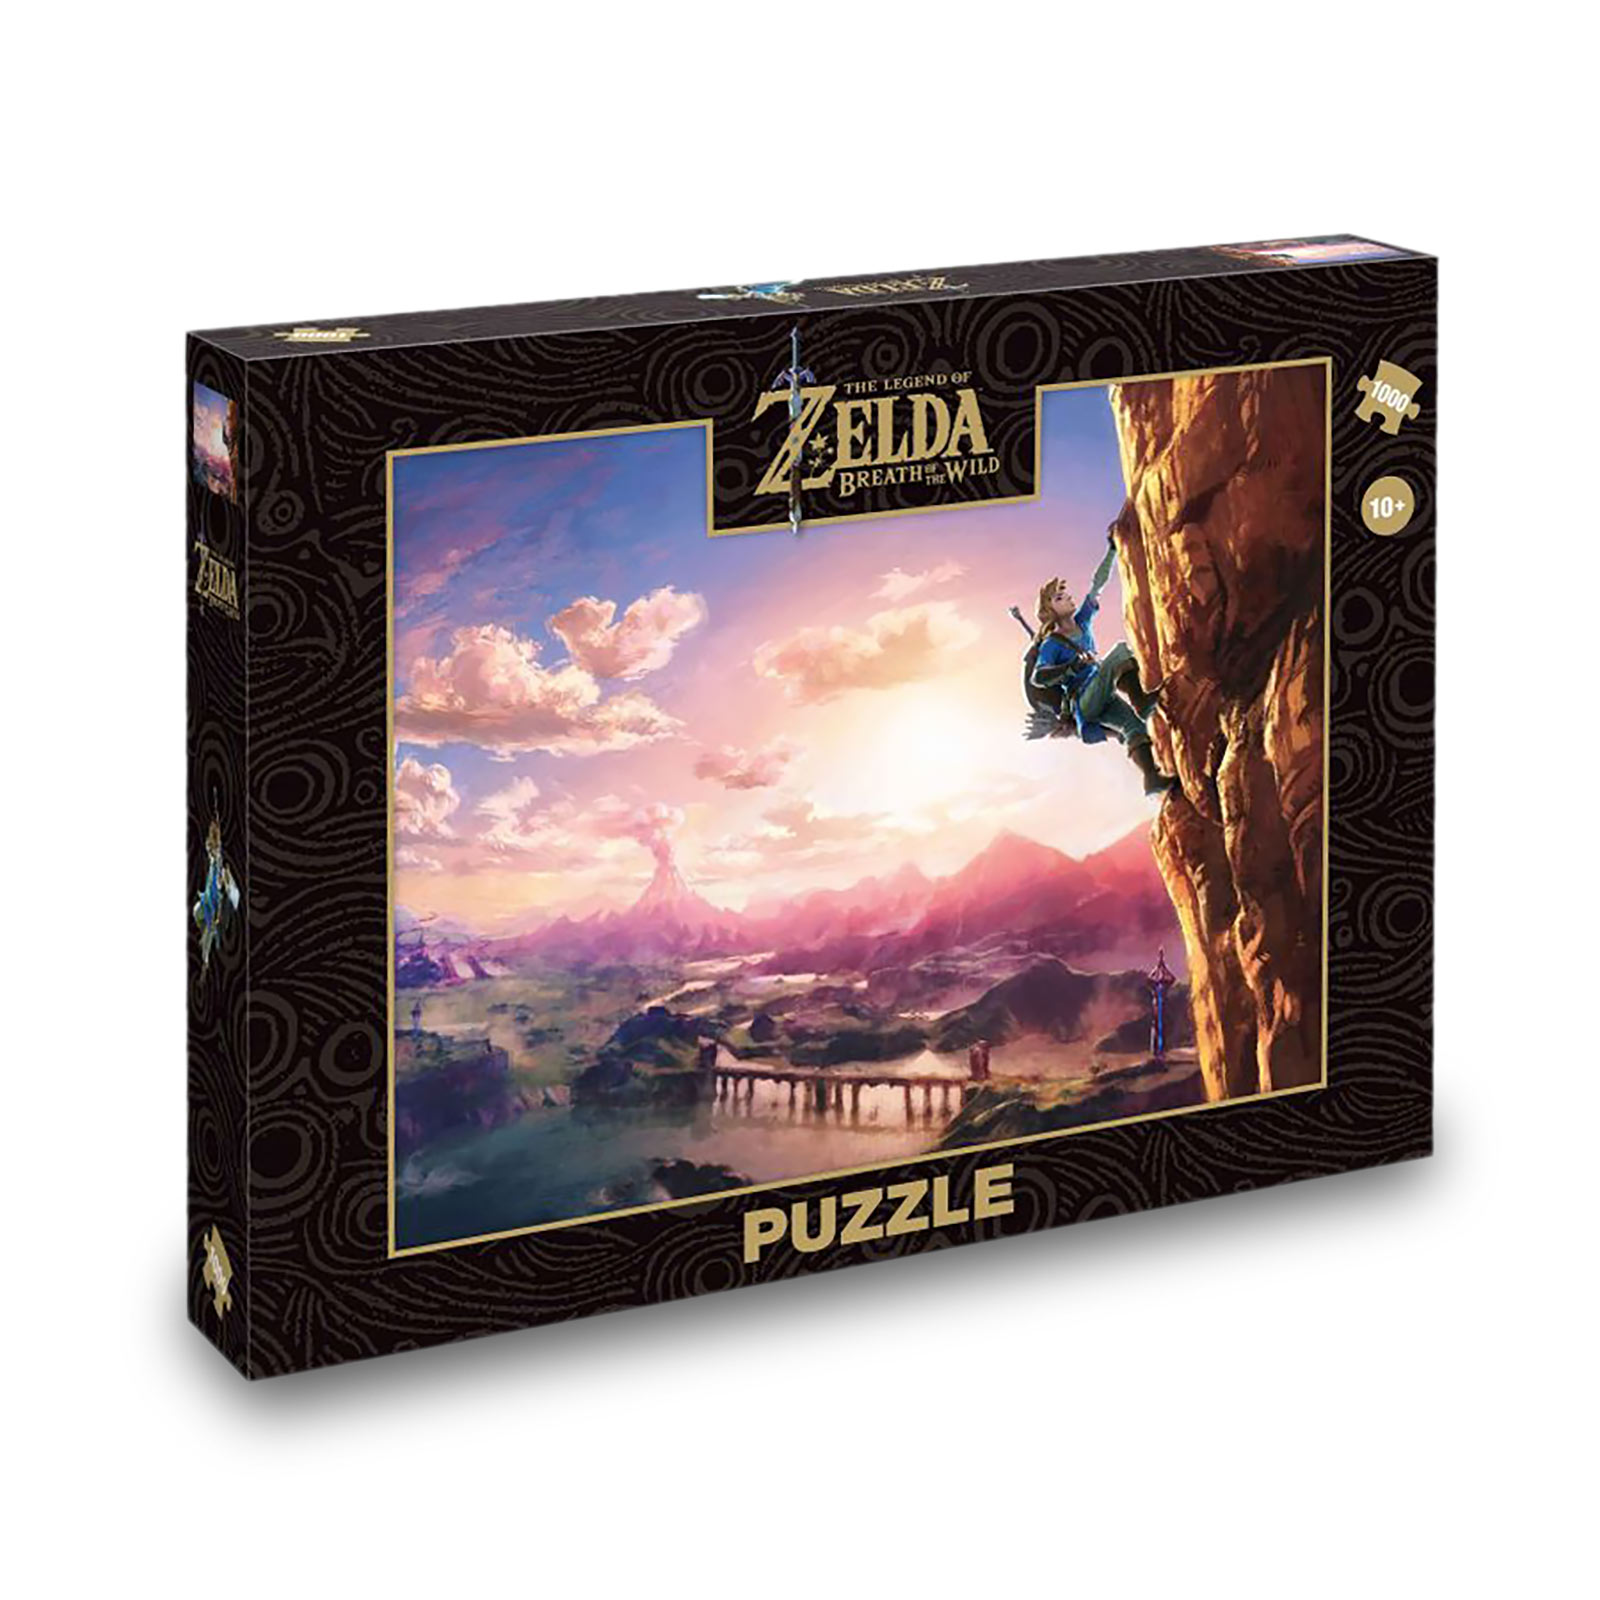 Zelda - Breath of the Wild Puzzle